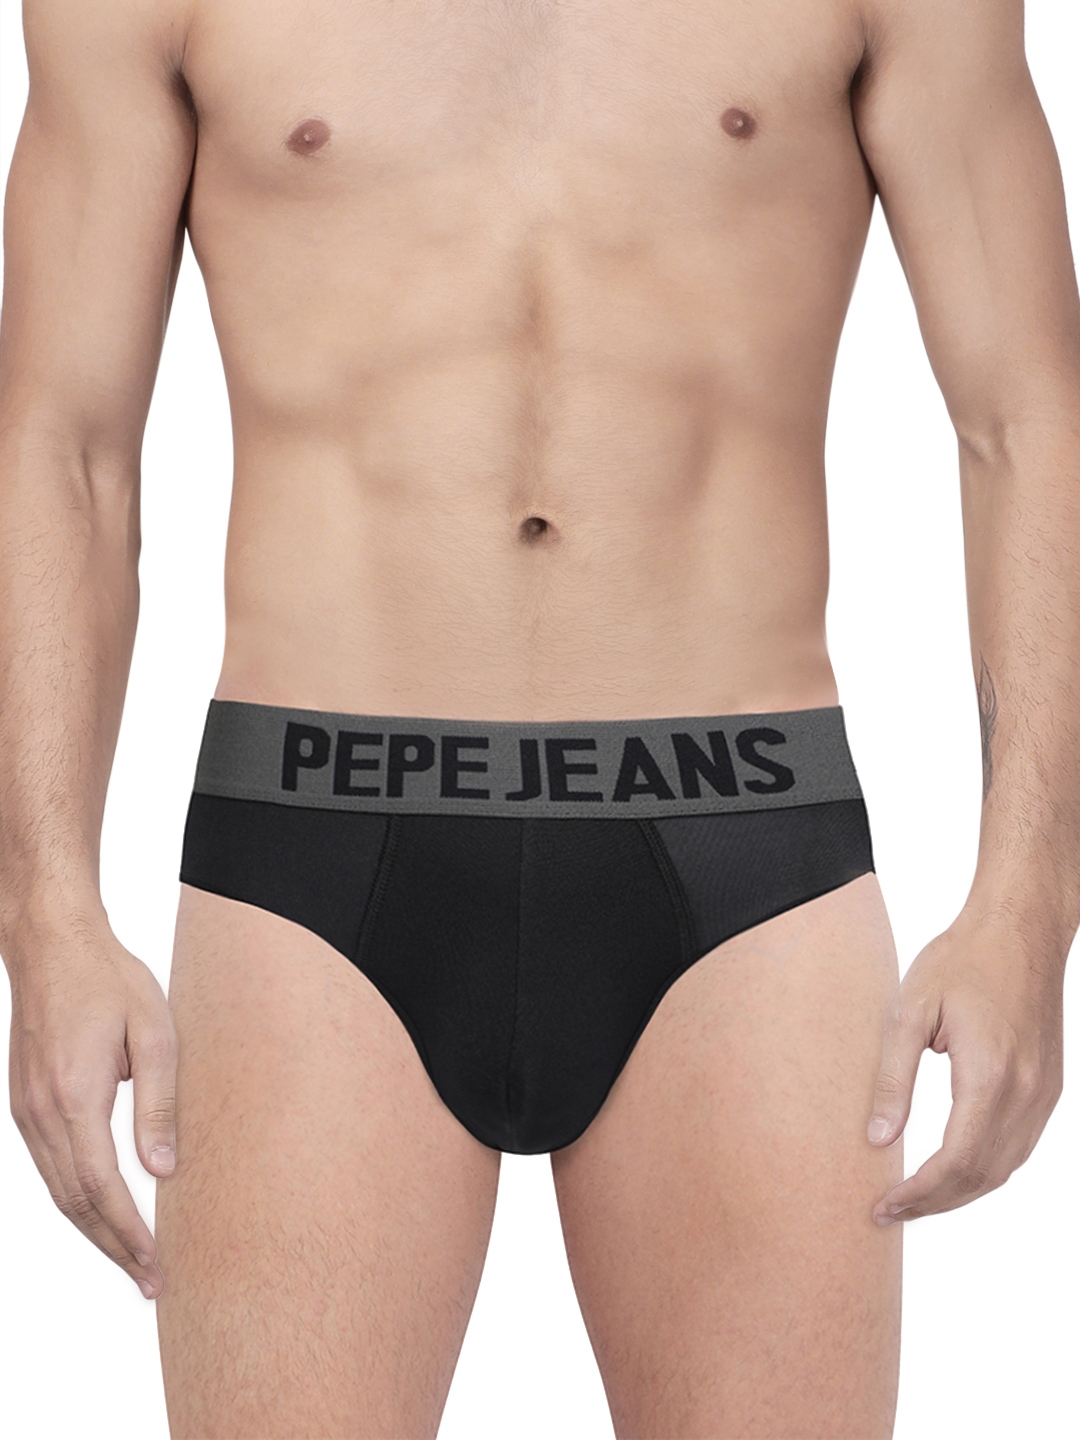 Buy Pepe Jeans Men Black Solid Briefs 8904311300526 - Briefs for